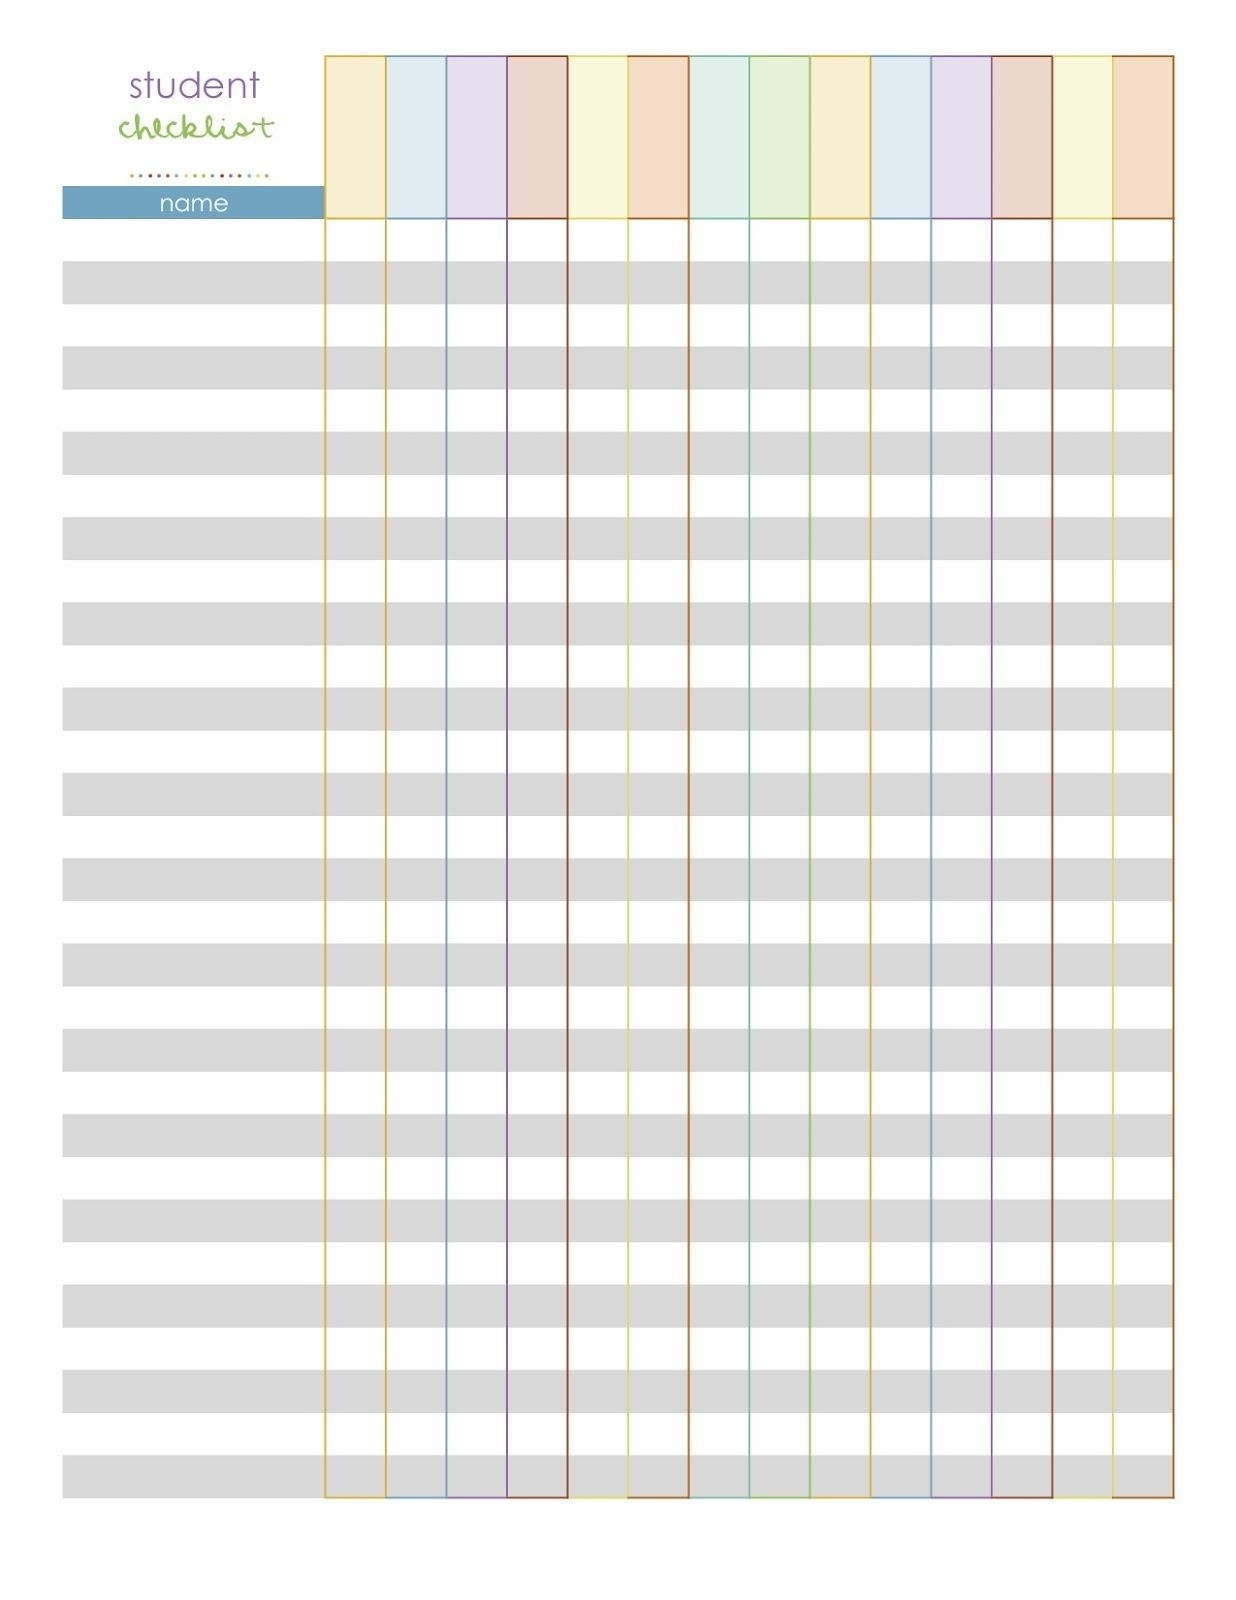 Blank Monthly Checklist Printable | Calendar Template Printable